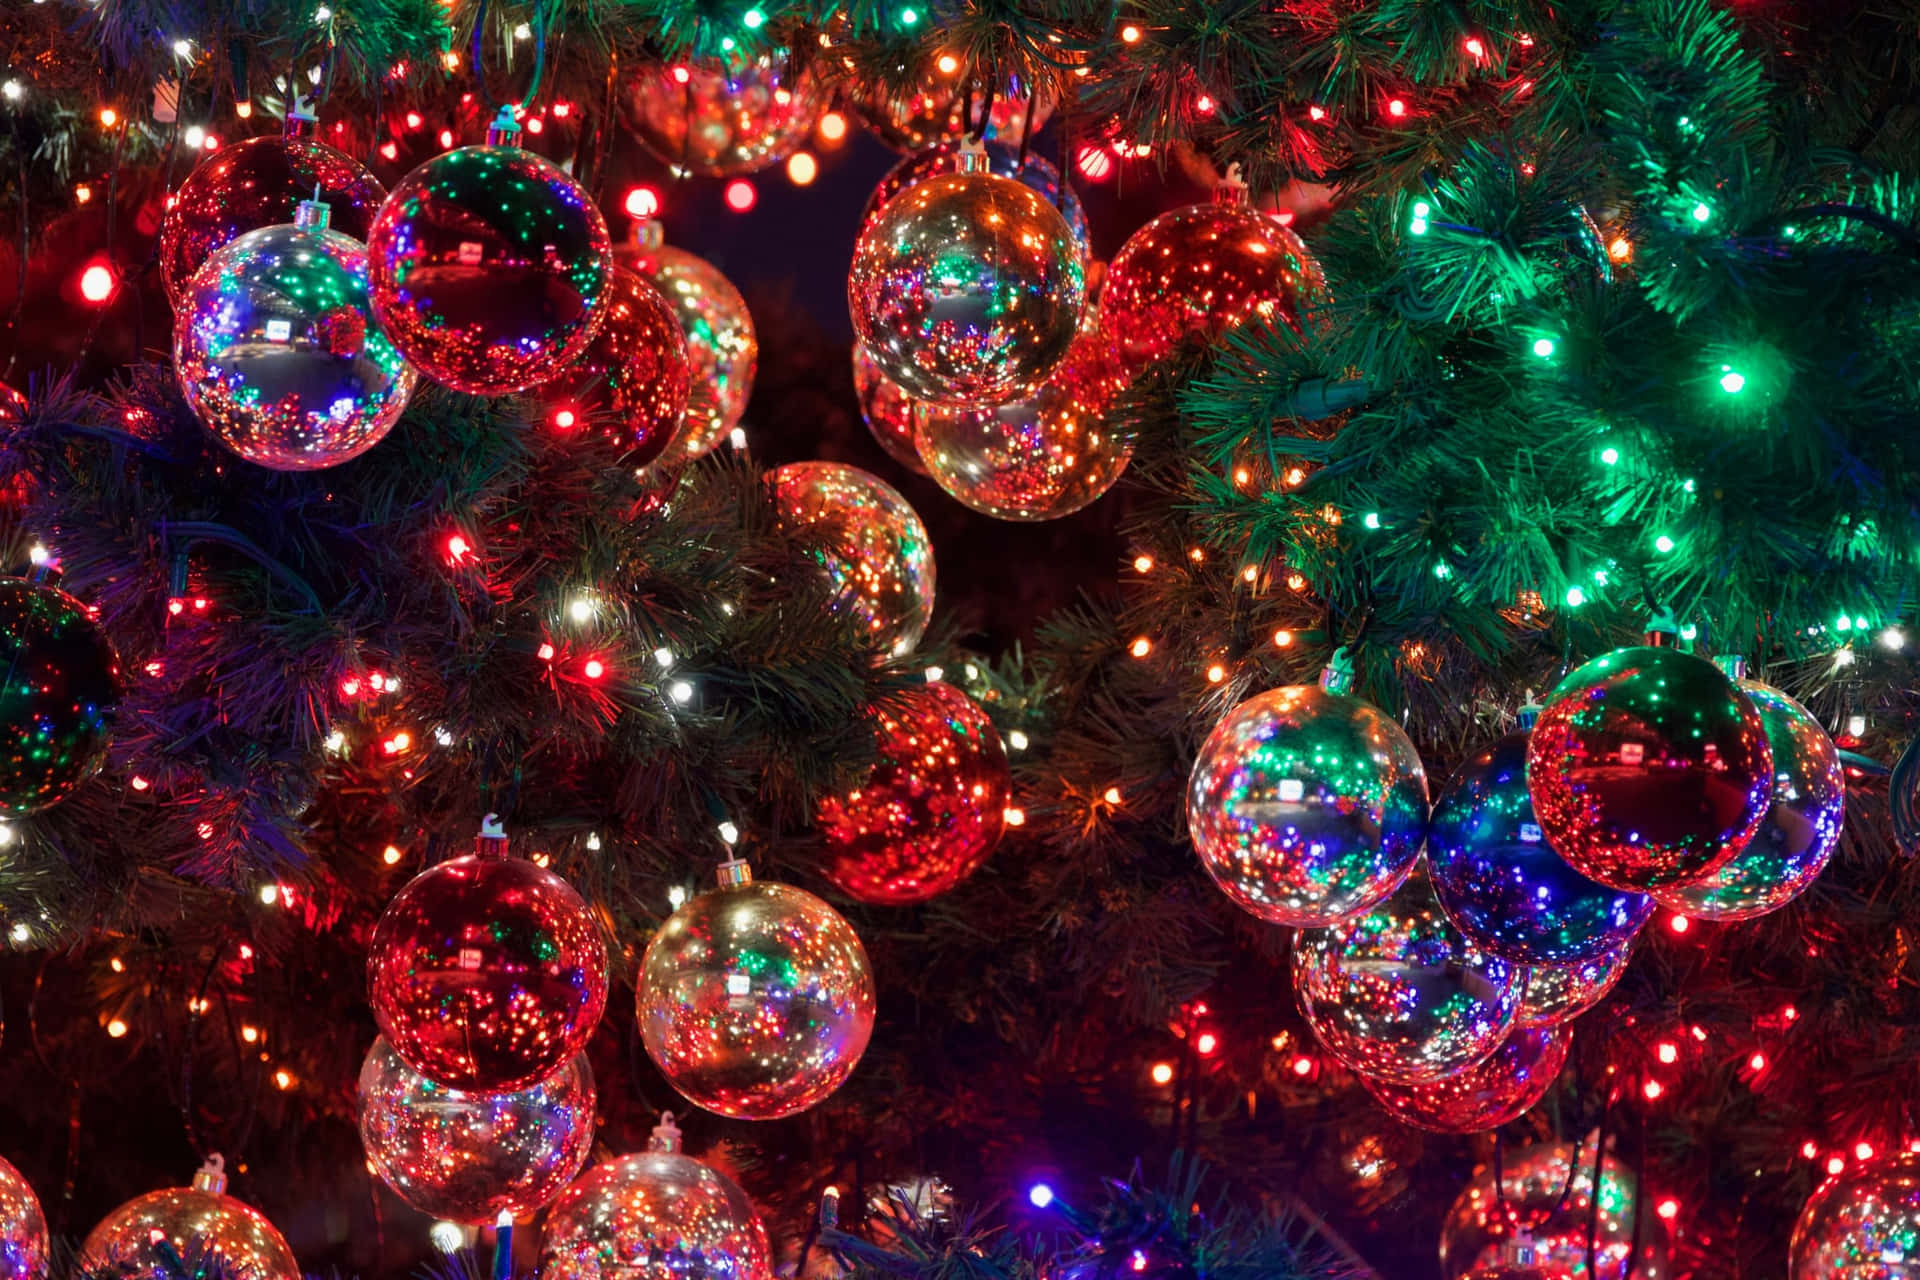 Enjoy the festive season with a virtual Christmas background